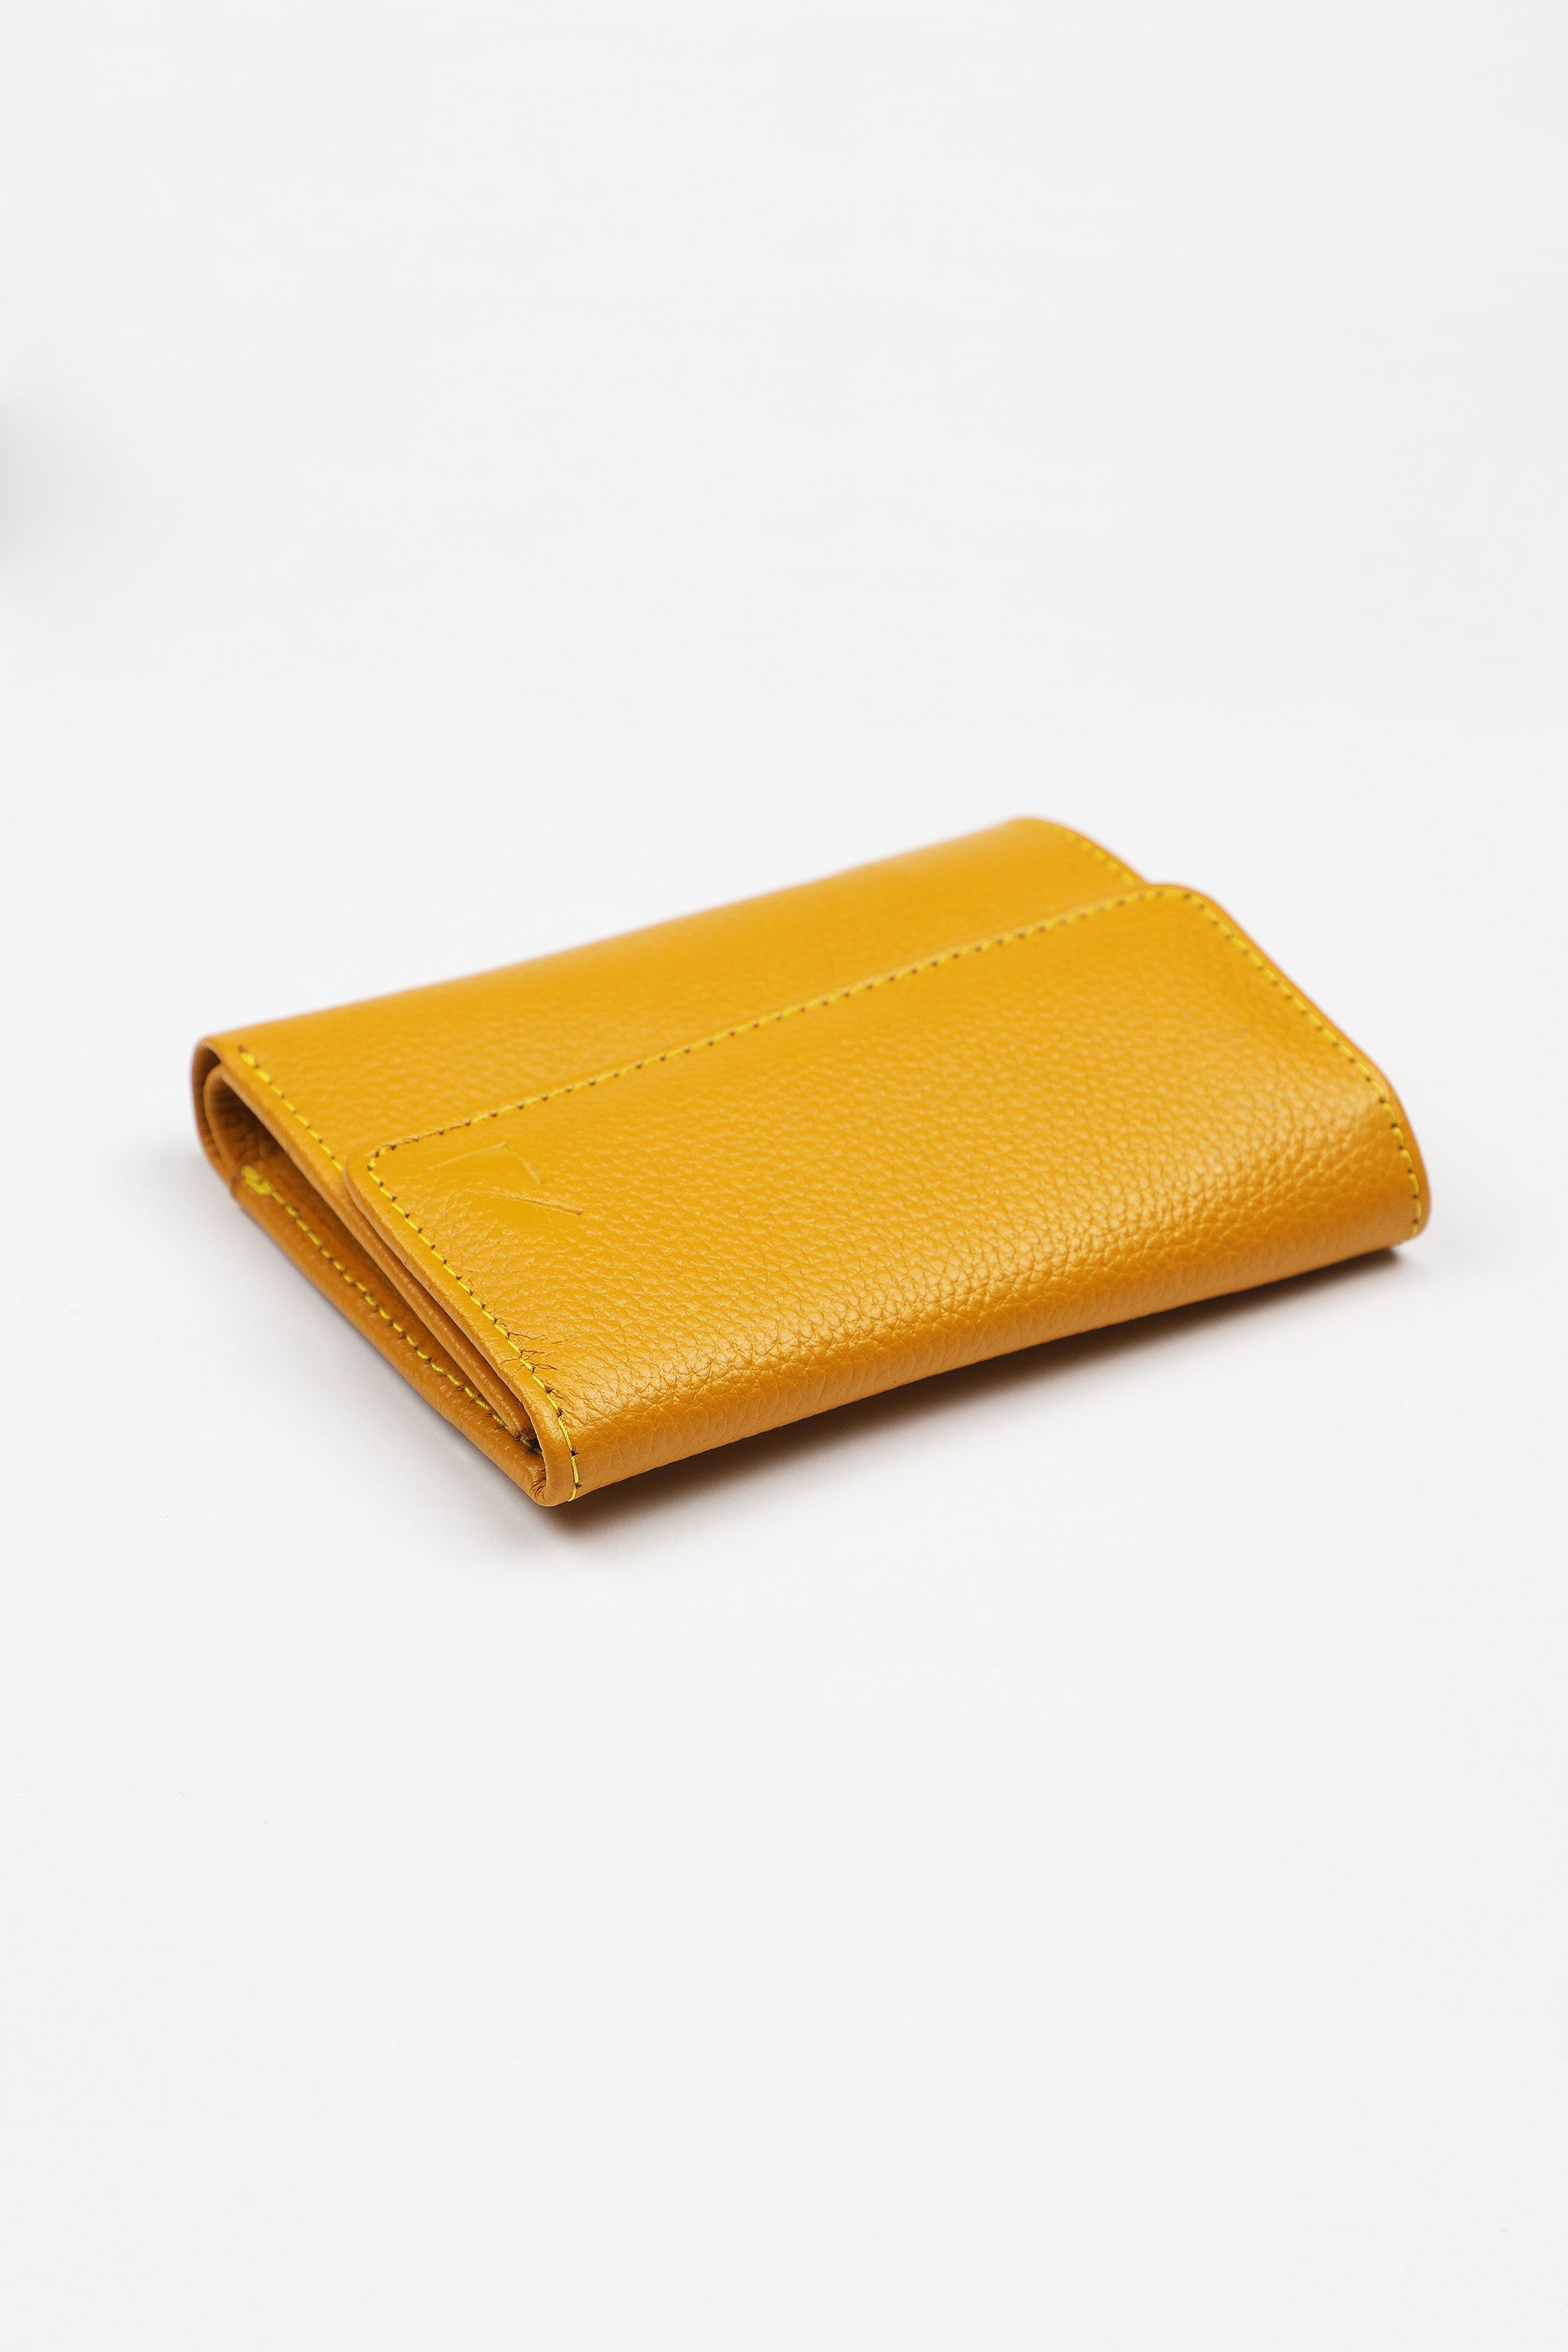 Purse Wallet Yellow